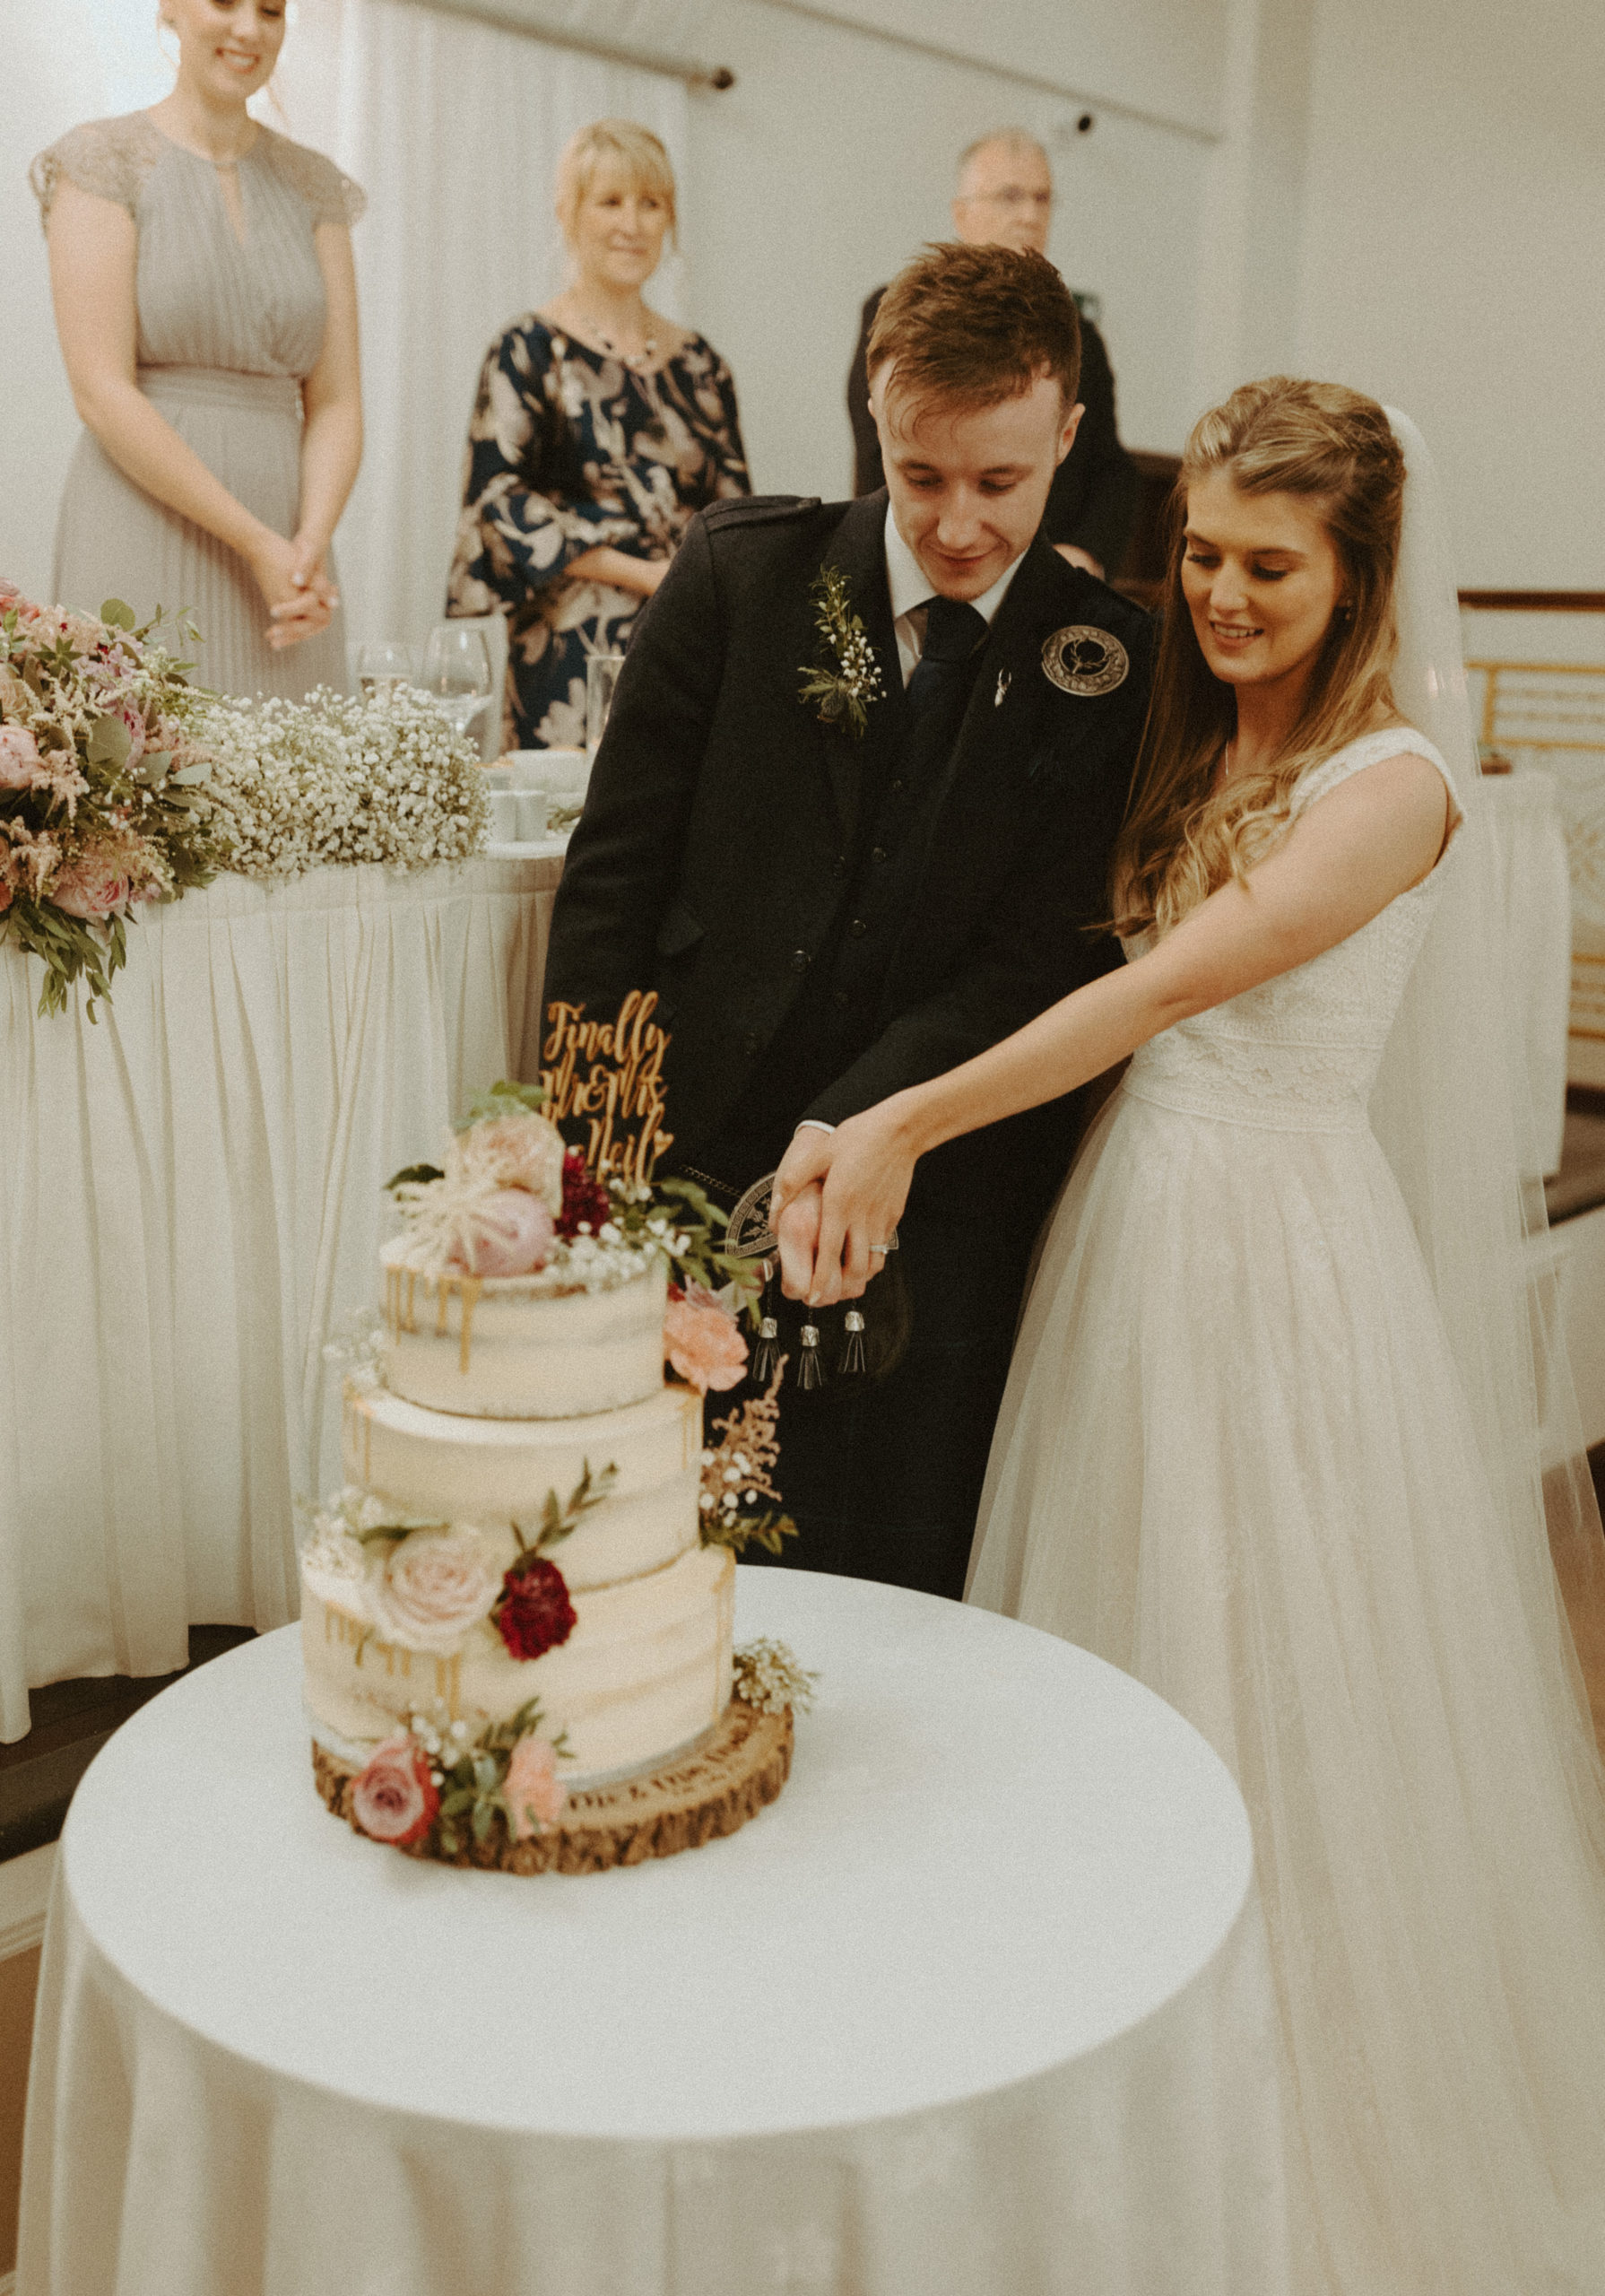 the wedding couple cutting the wedding cake